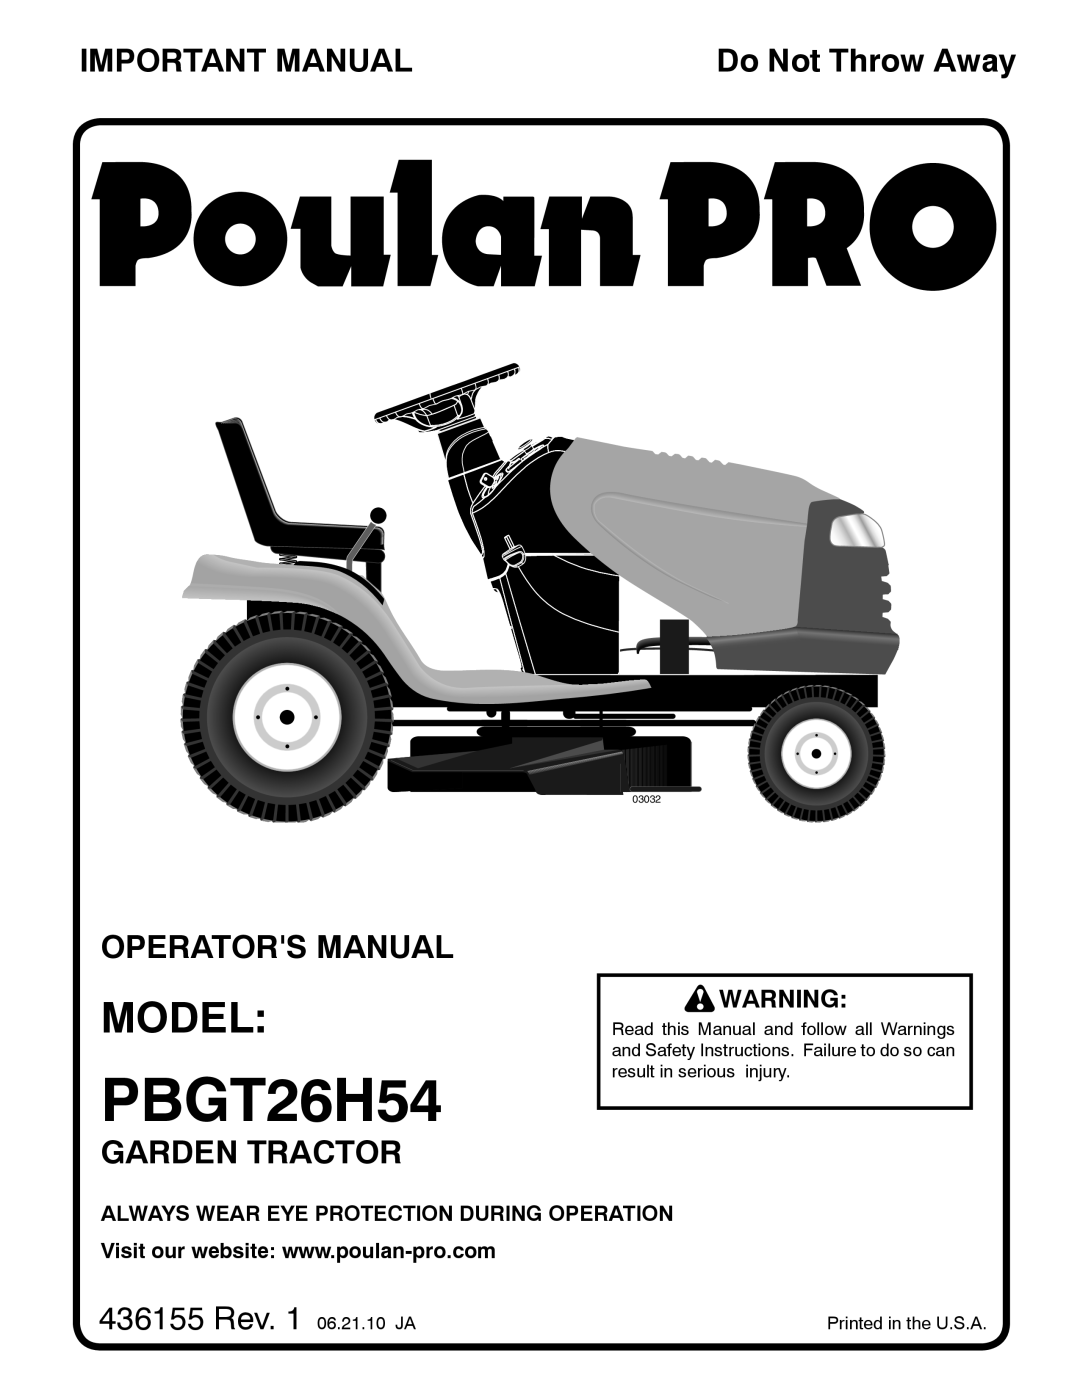 Poulan 96042011101 manual Important Manual, Operators Manual, Garden Tractor, PBGT26H54, Model, 436155 Rev. 1 06.21.10 JA 